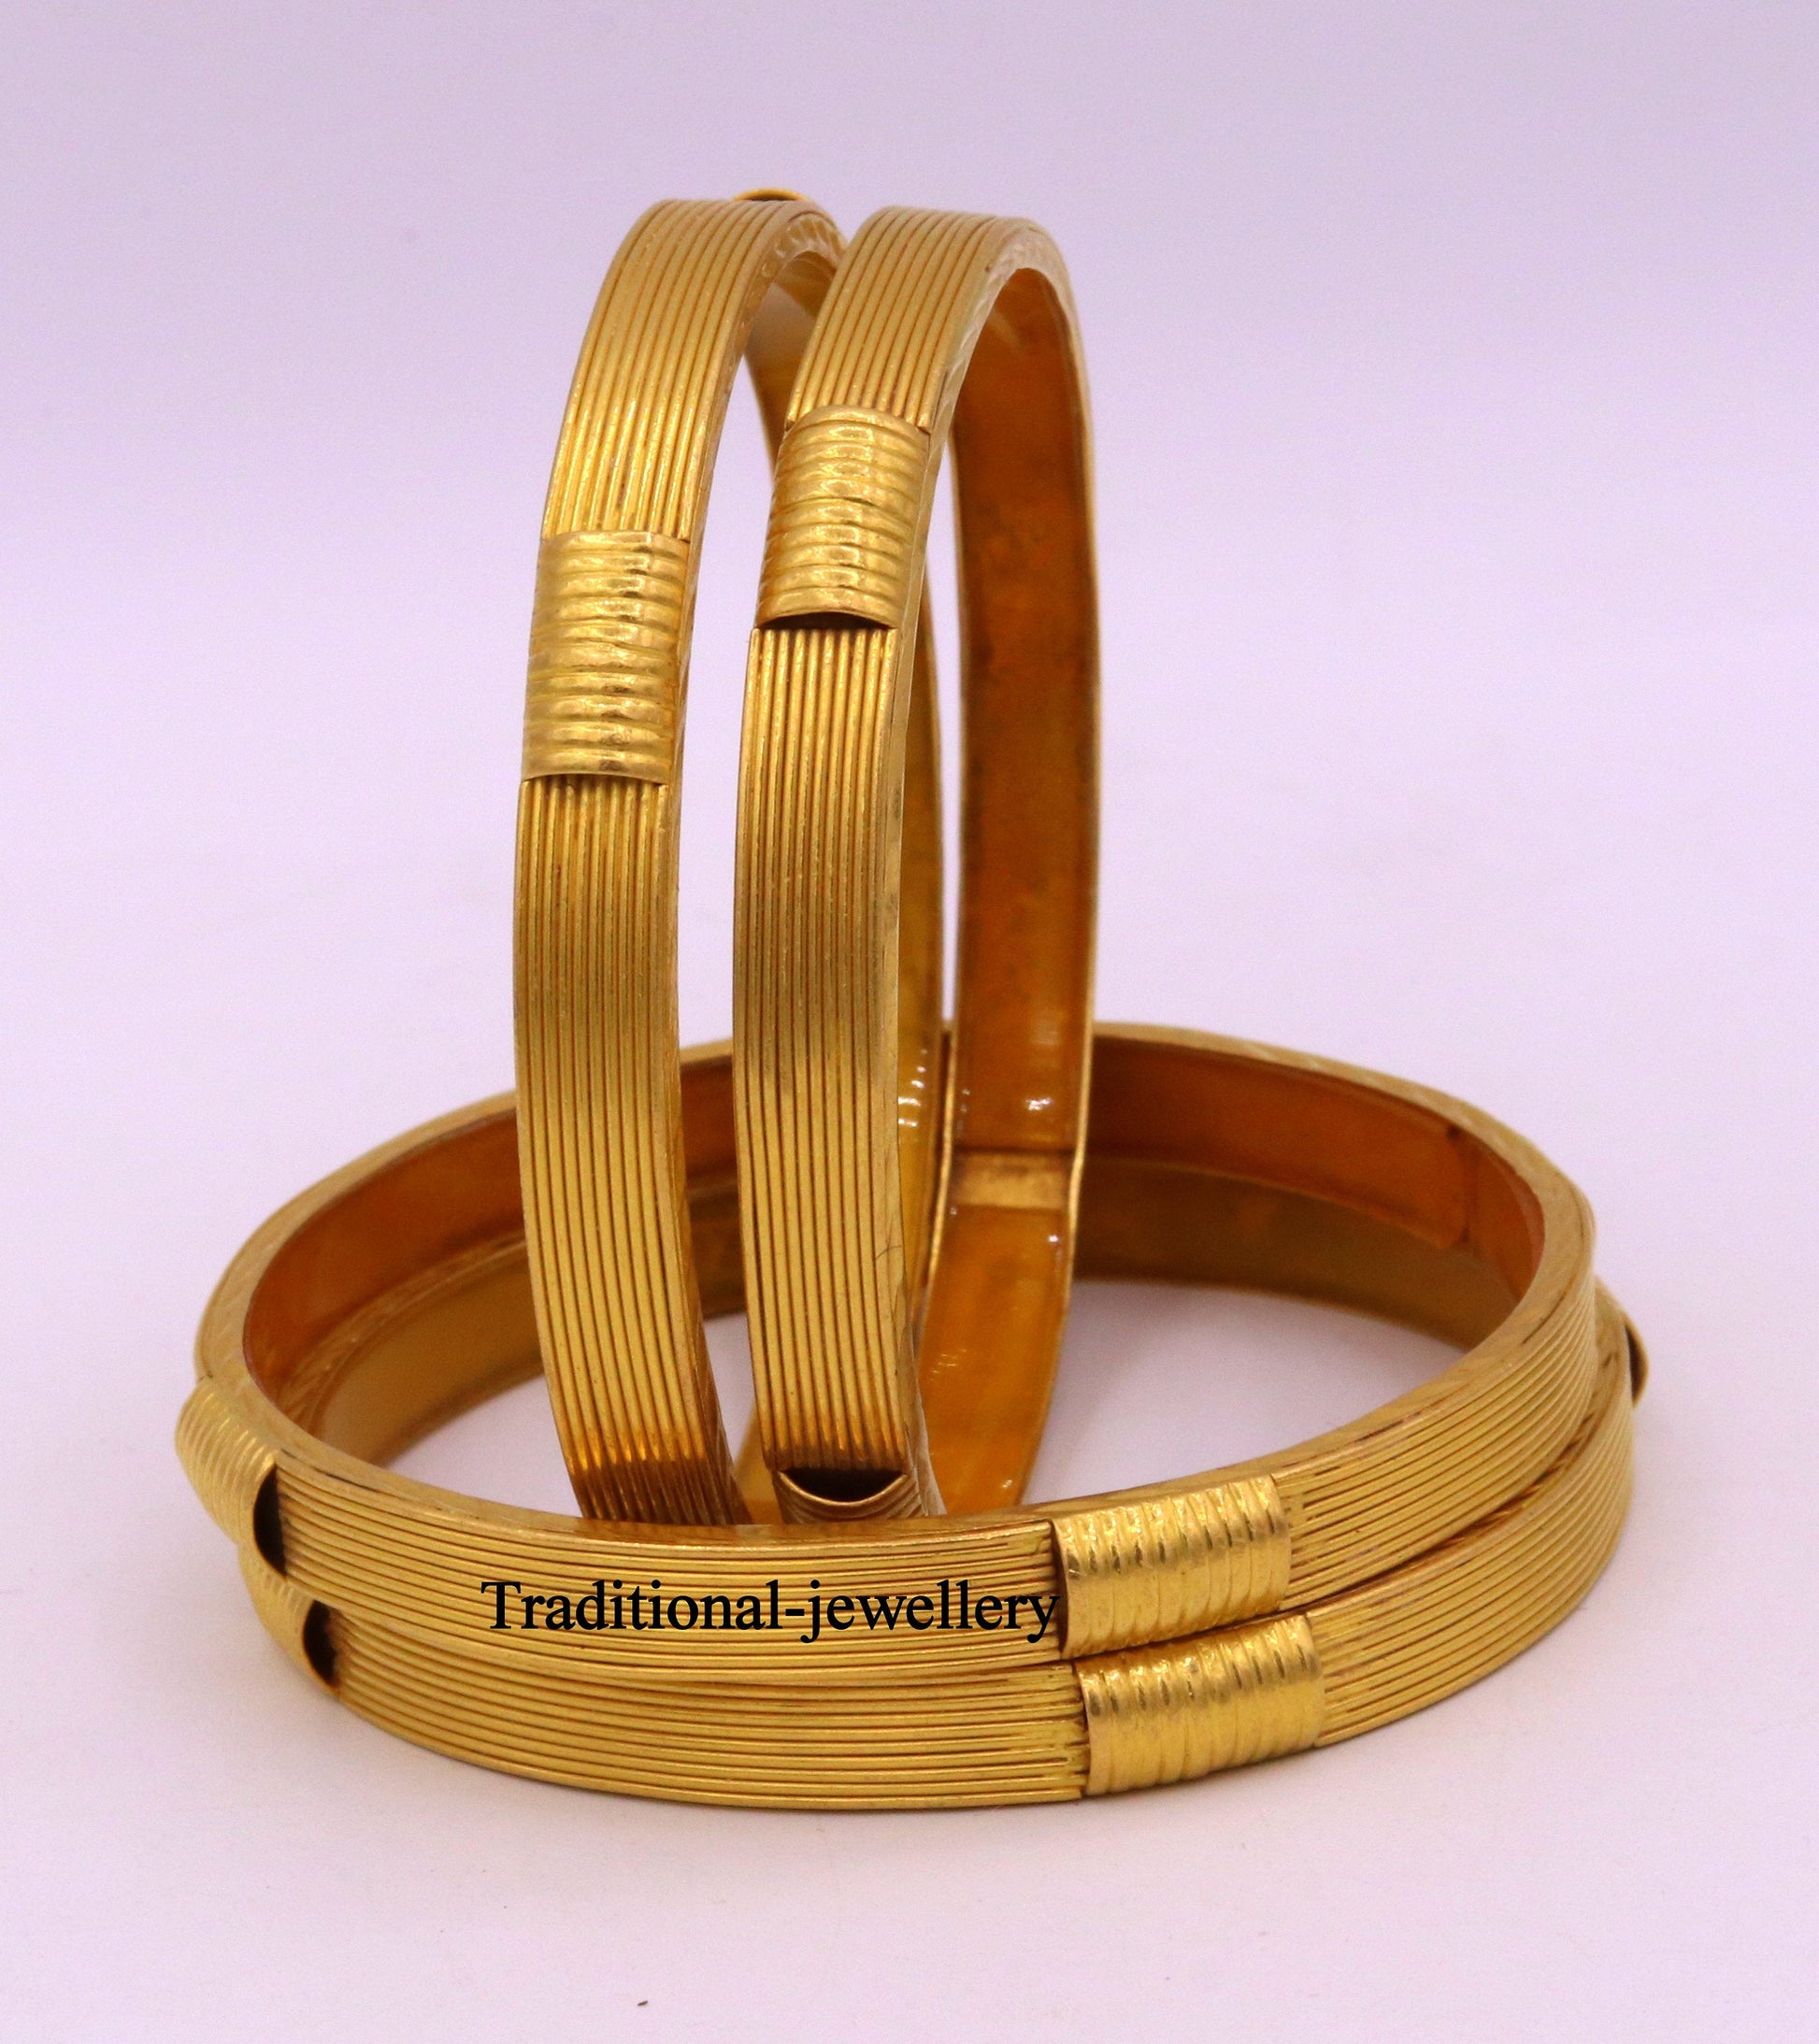 Vintage antique style handmade 22kt yellow gold bangle bracelet women's wedding anniversary jewelry - TRIBAL ORNAMENTS